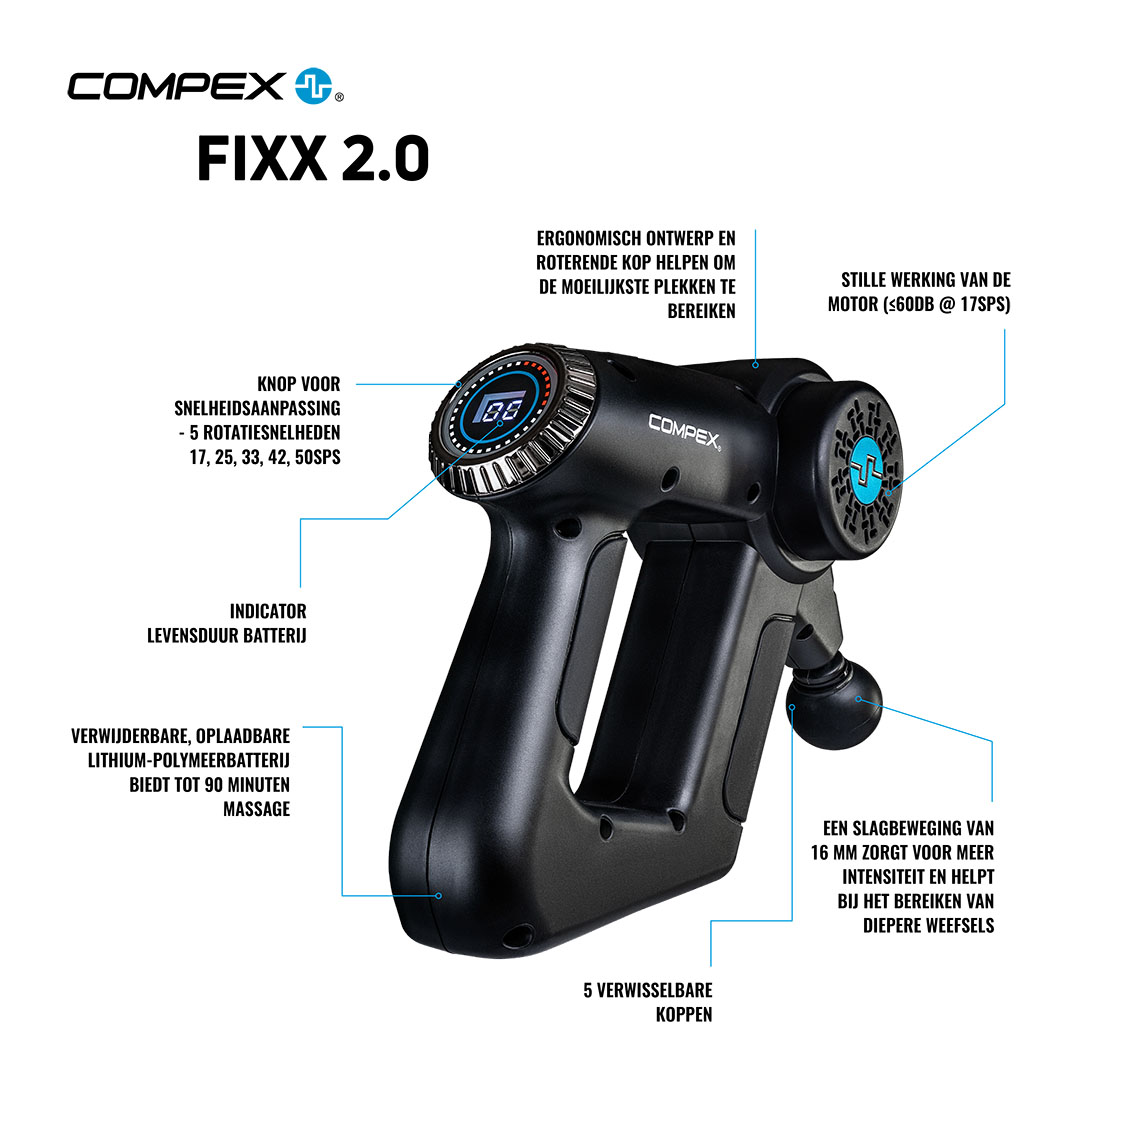 Compex Fixx 2.0 Infographique